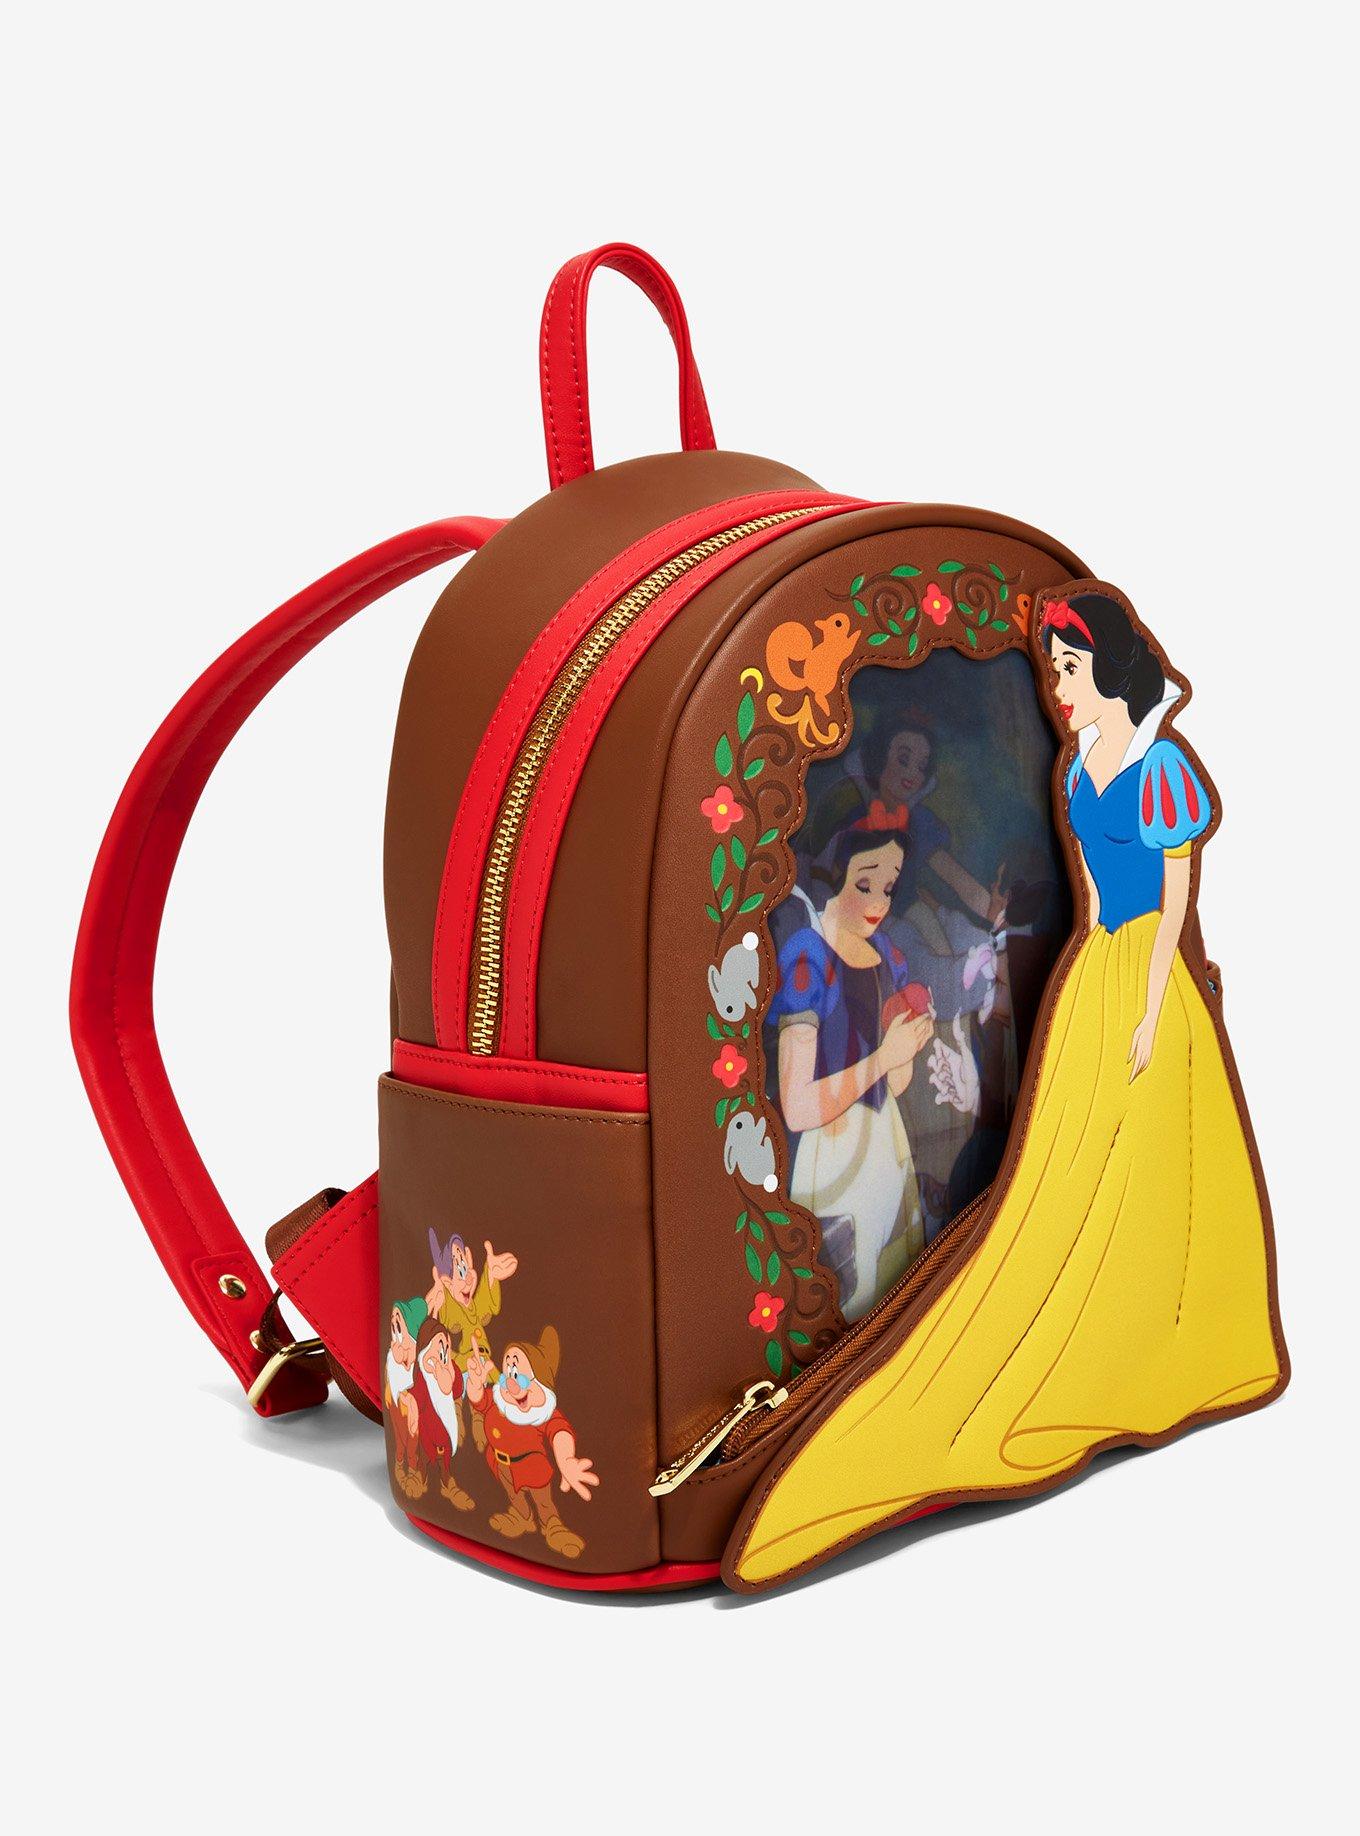 First Look: Sleeping Beauty Princess Lenticular Mini Backpack